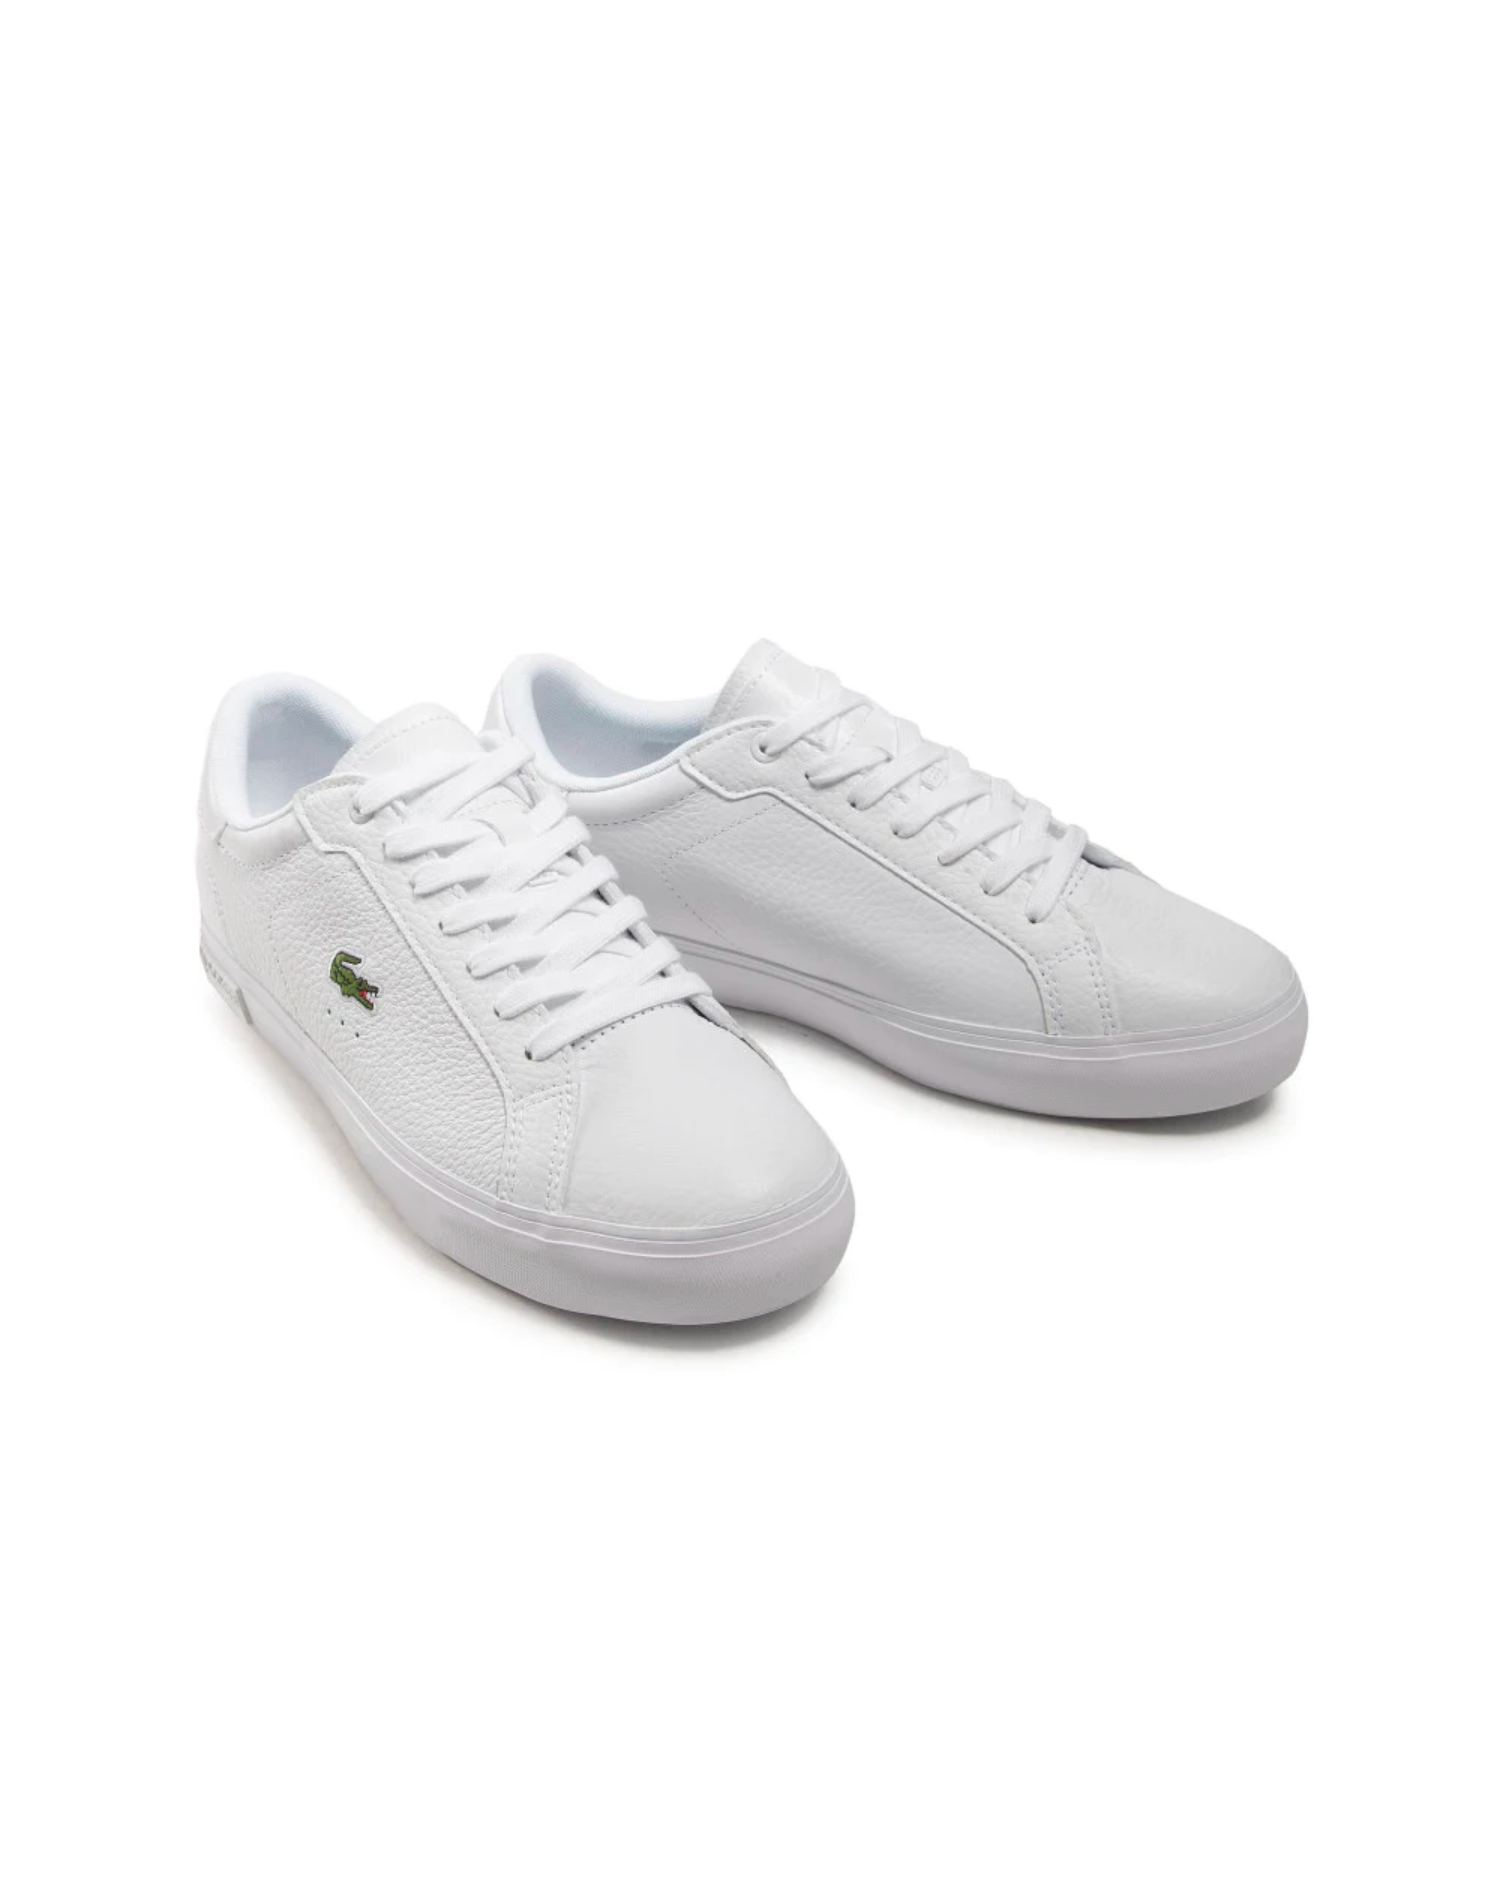 Mens Lacoste Bayliss Athletic Shoe - White Monochrome | Journeys